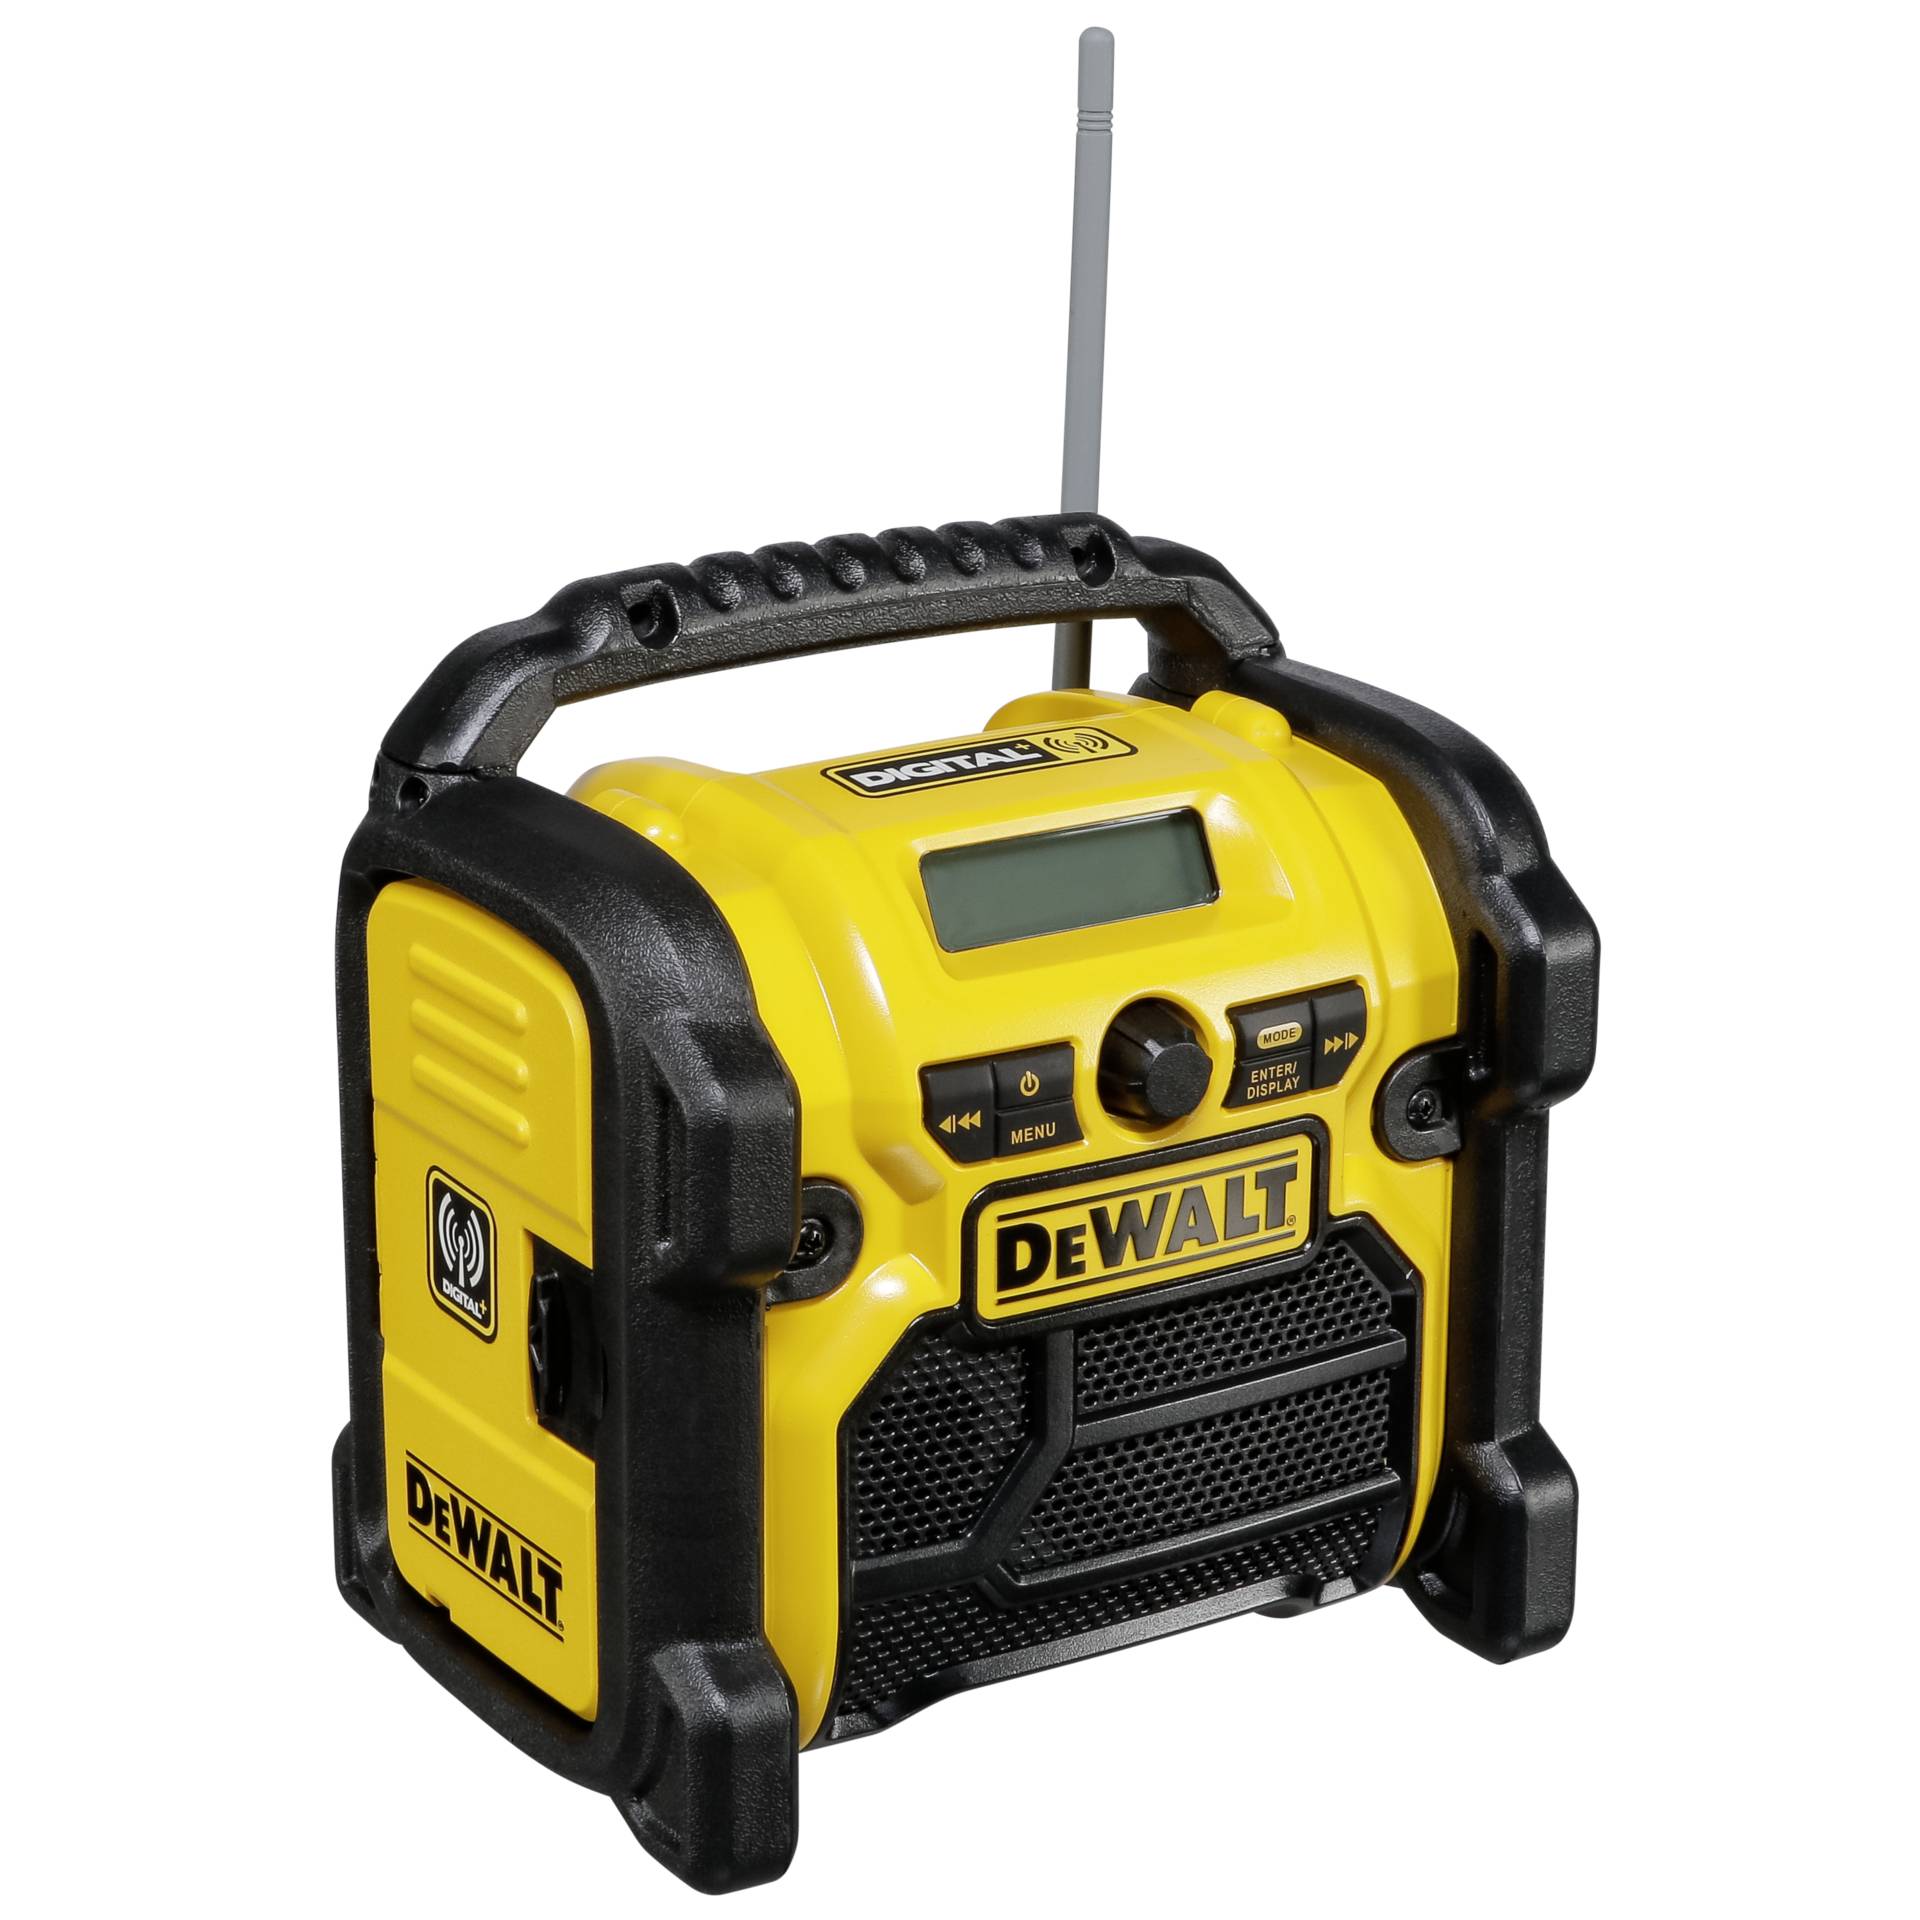 Dewalt -DCR020-QW XR Li-Ion Kompakt-Radio DAB+ -Dewalt Hardware/Electronic Grooves.land/Playthek